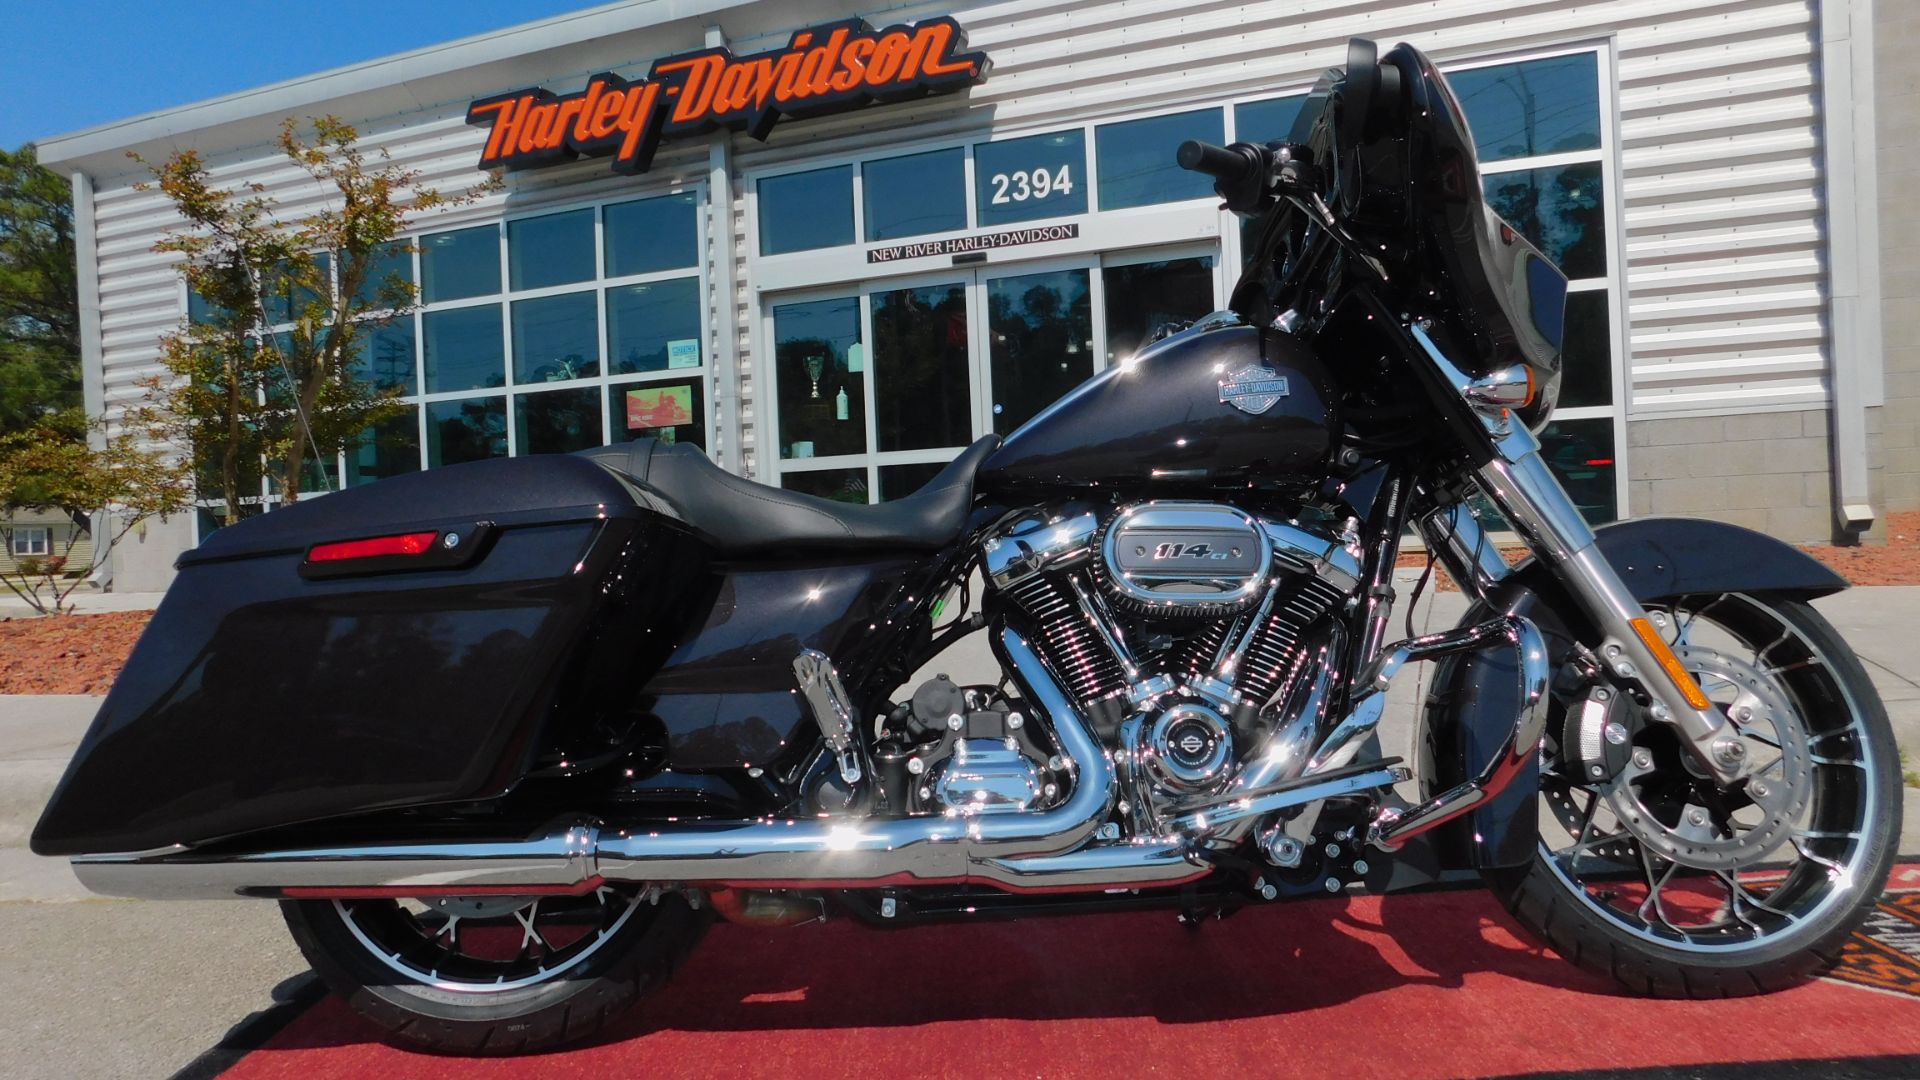 New 2021 Harley Davidson Street Glide Special Motorcycles In Jacksonville Nc Nrhd4127 Black Jack Metallic